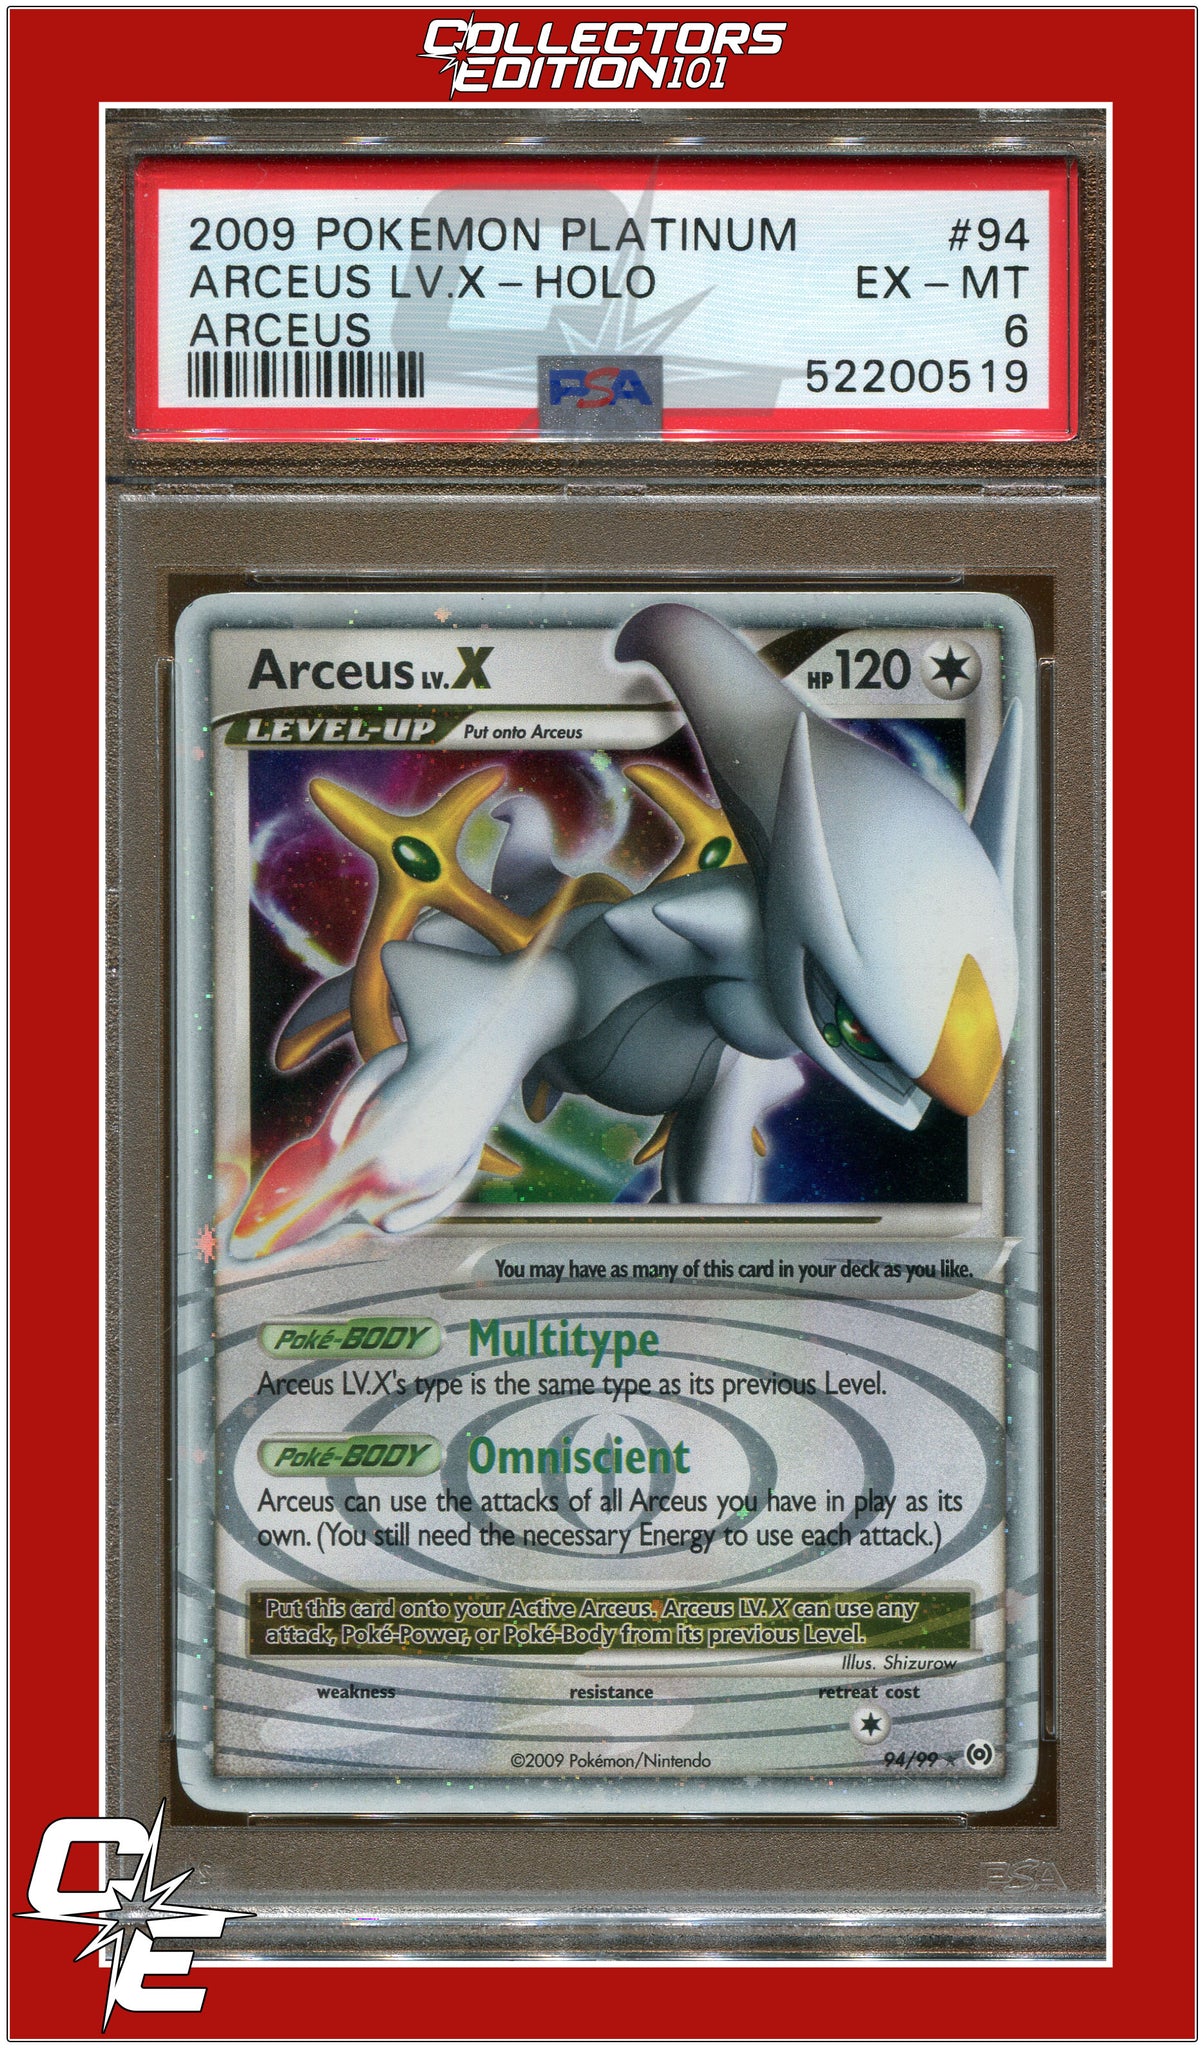 Arceus LV.X Promo Diamond & Pearl Foil Pokemon Card